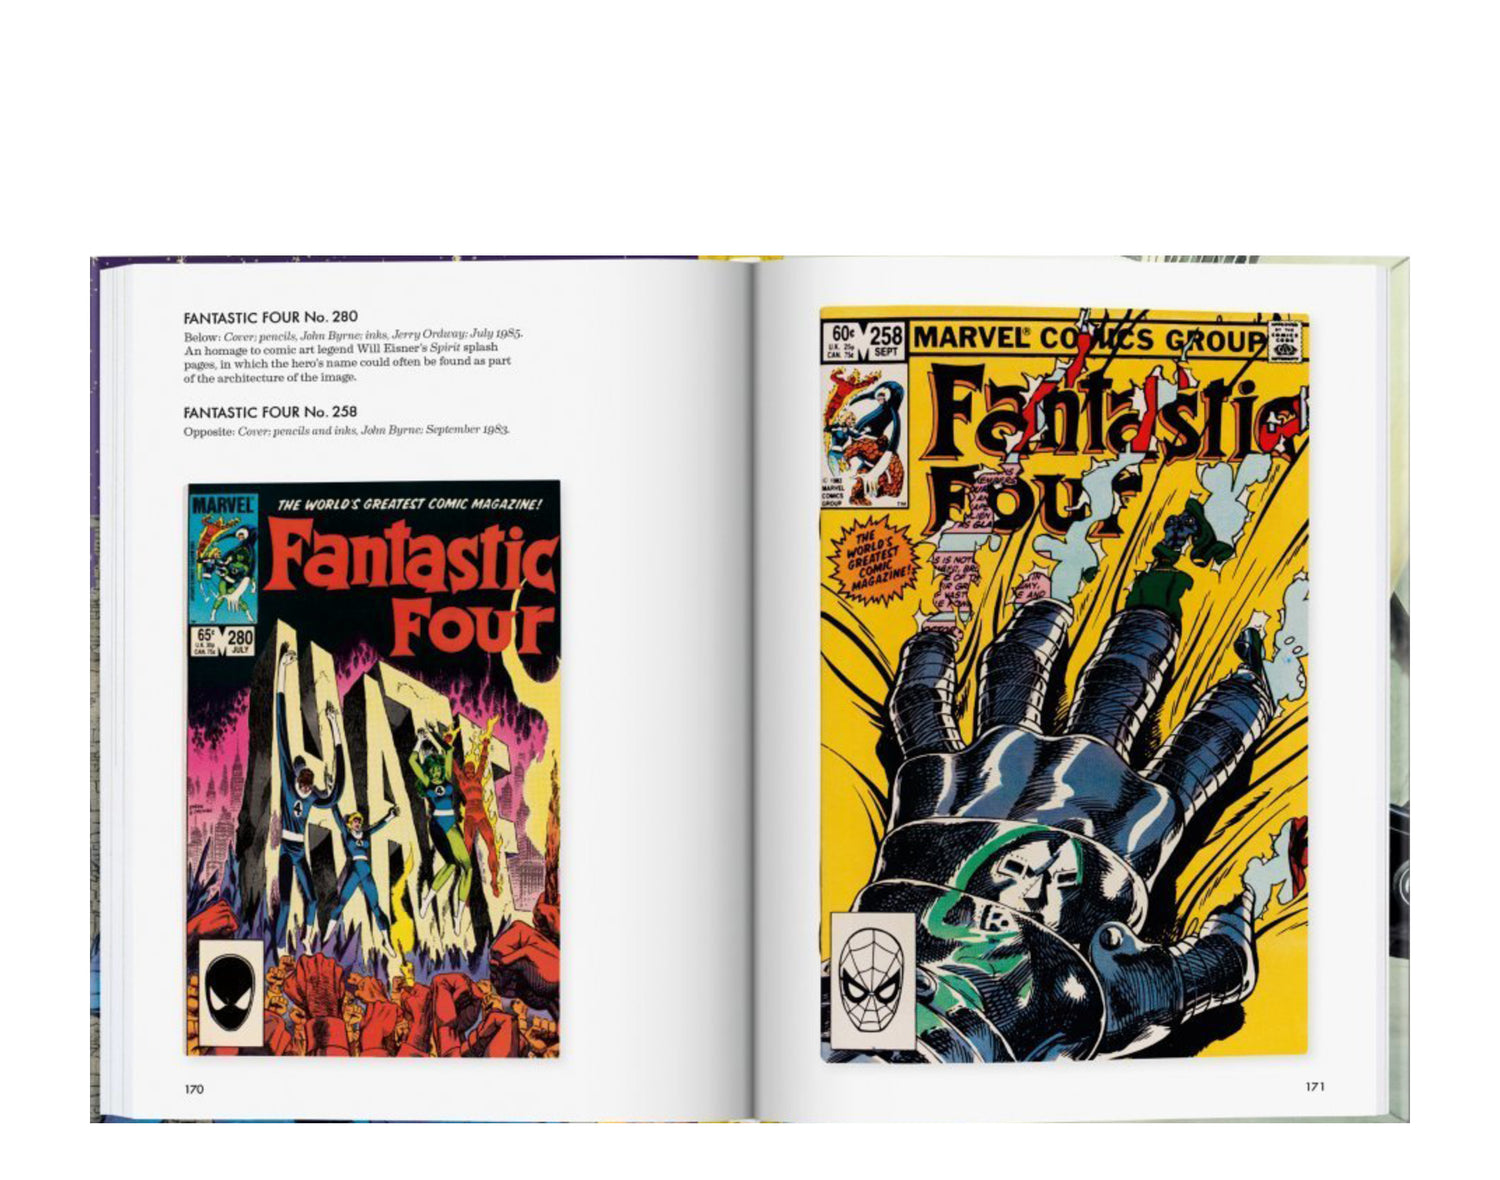 Taschen Books - The Little Book of Fantastic Four Flexicover Book